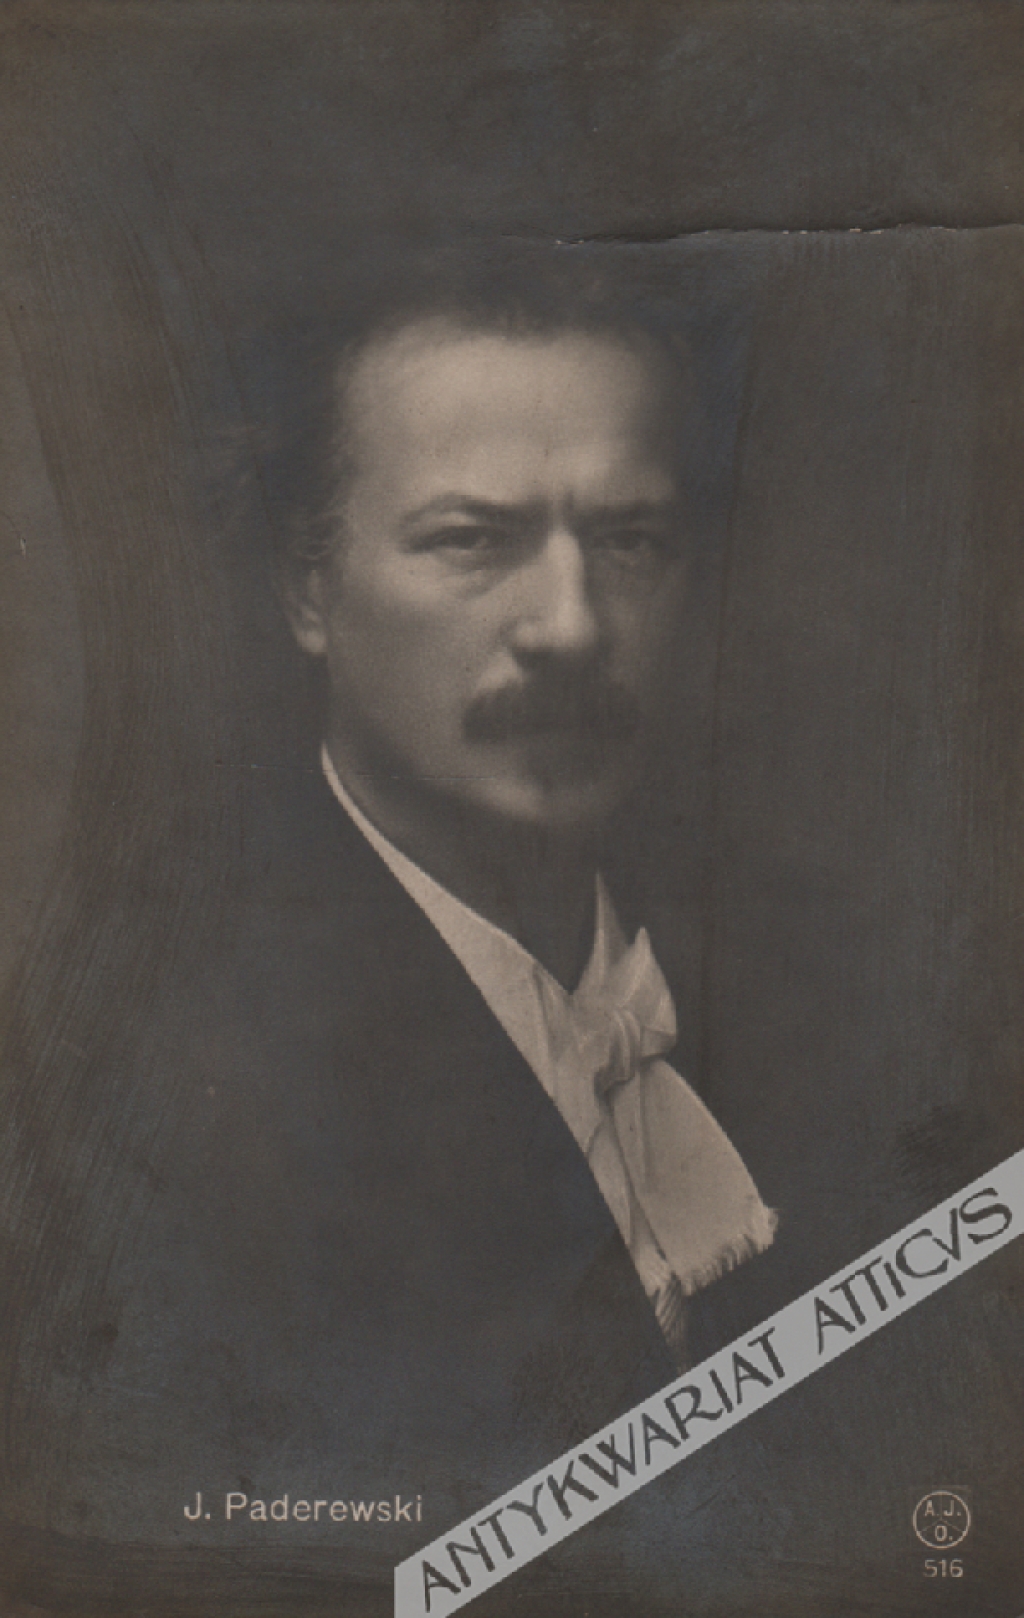 [pocztówka, lata 1920-te] J. Paderewski